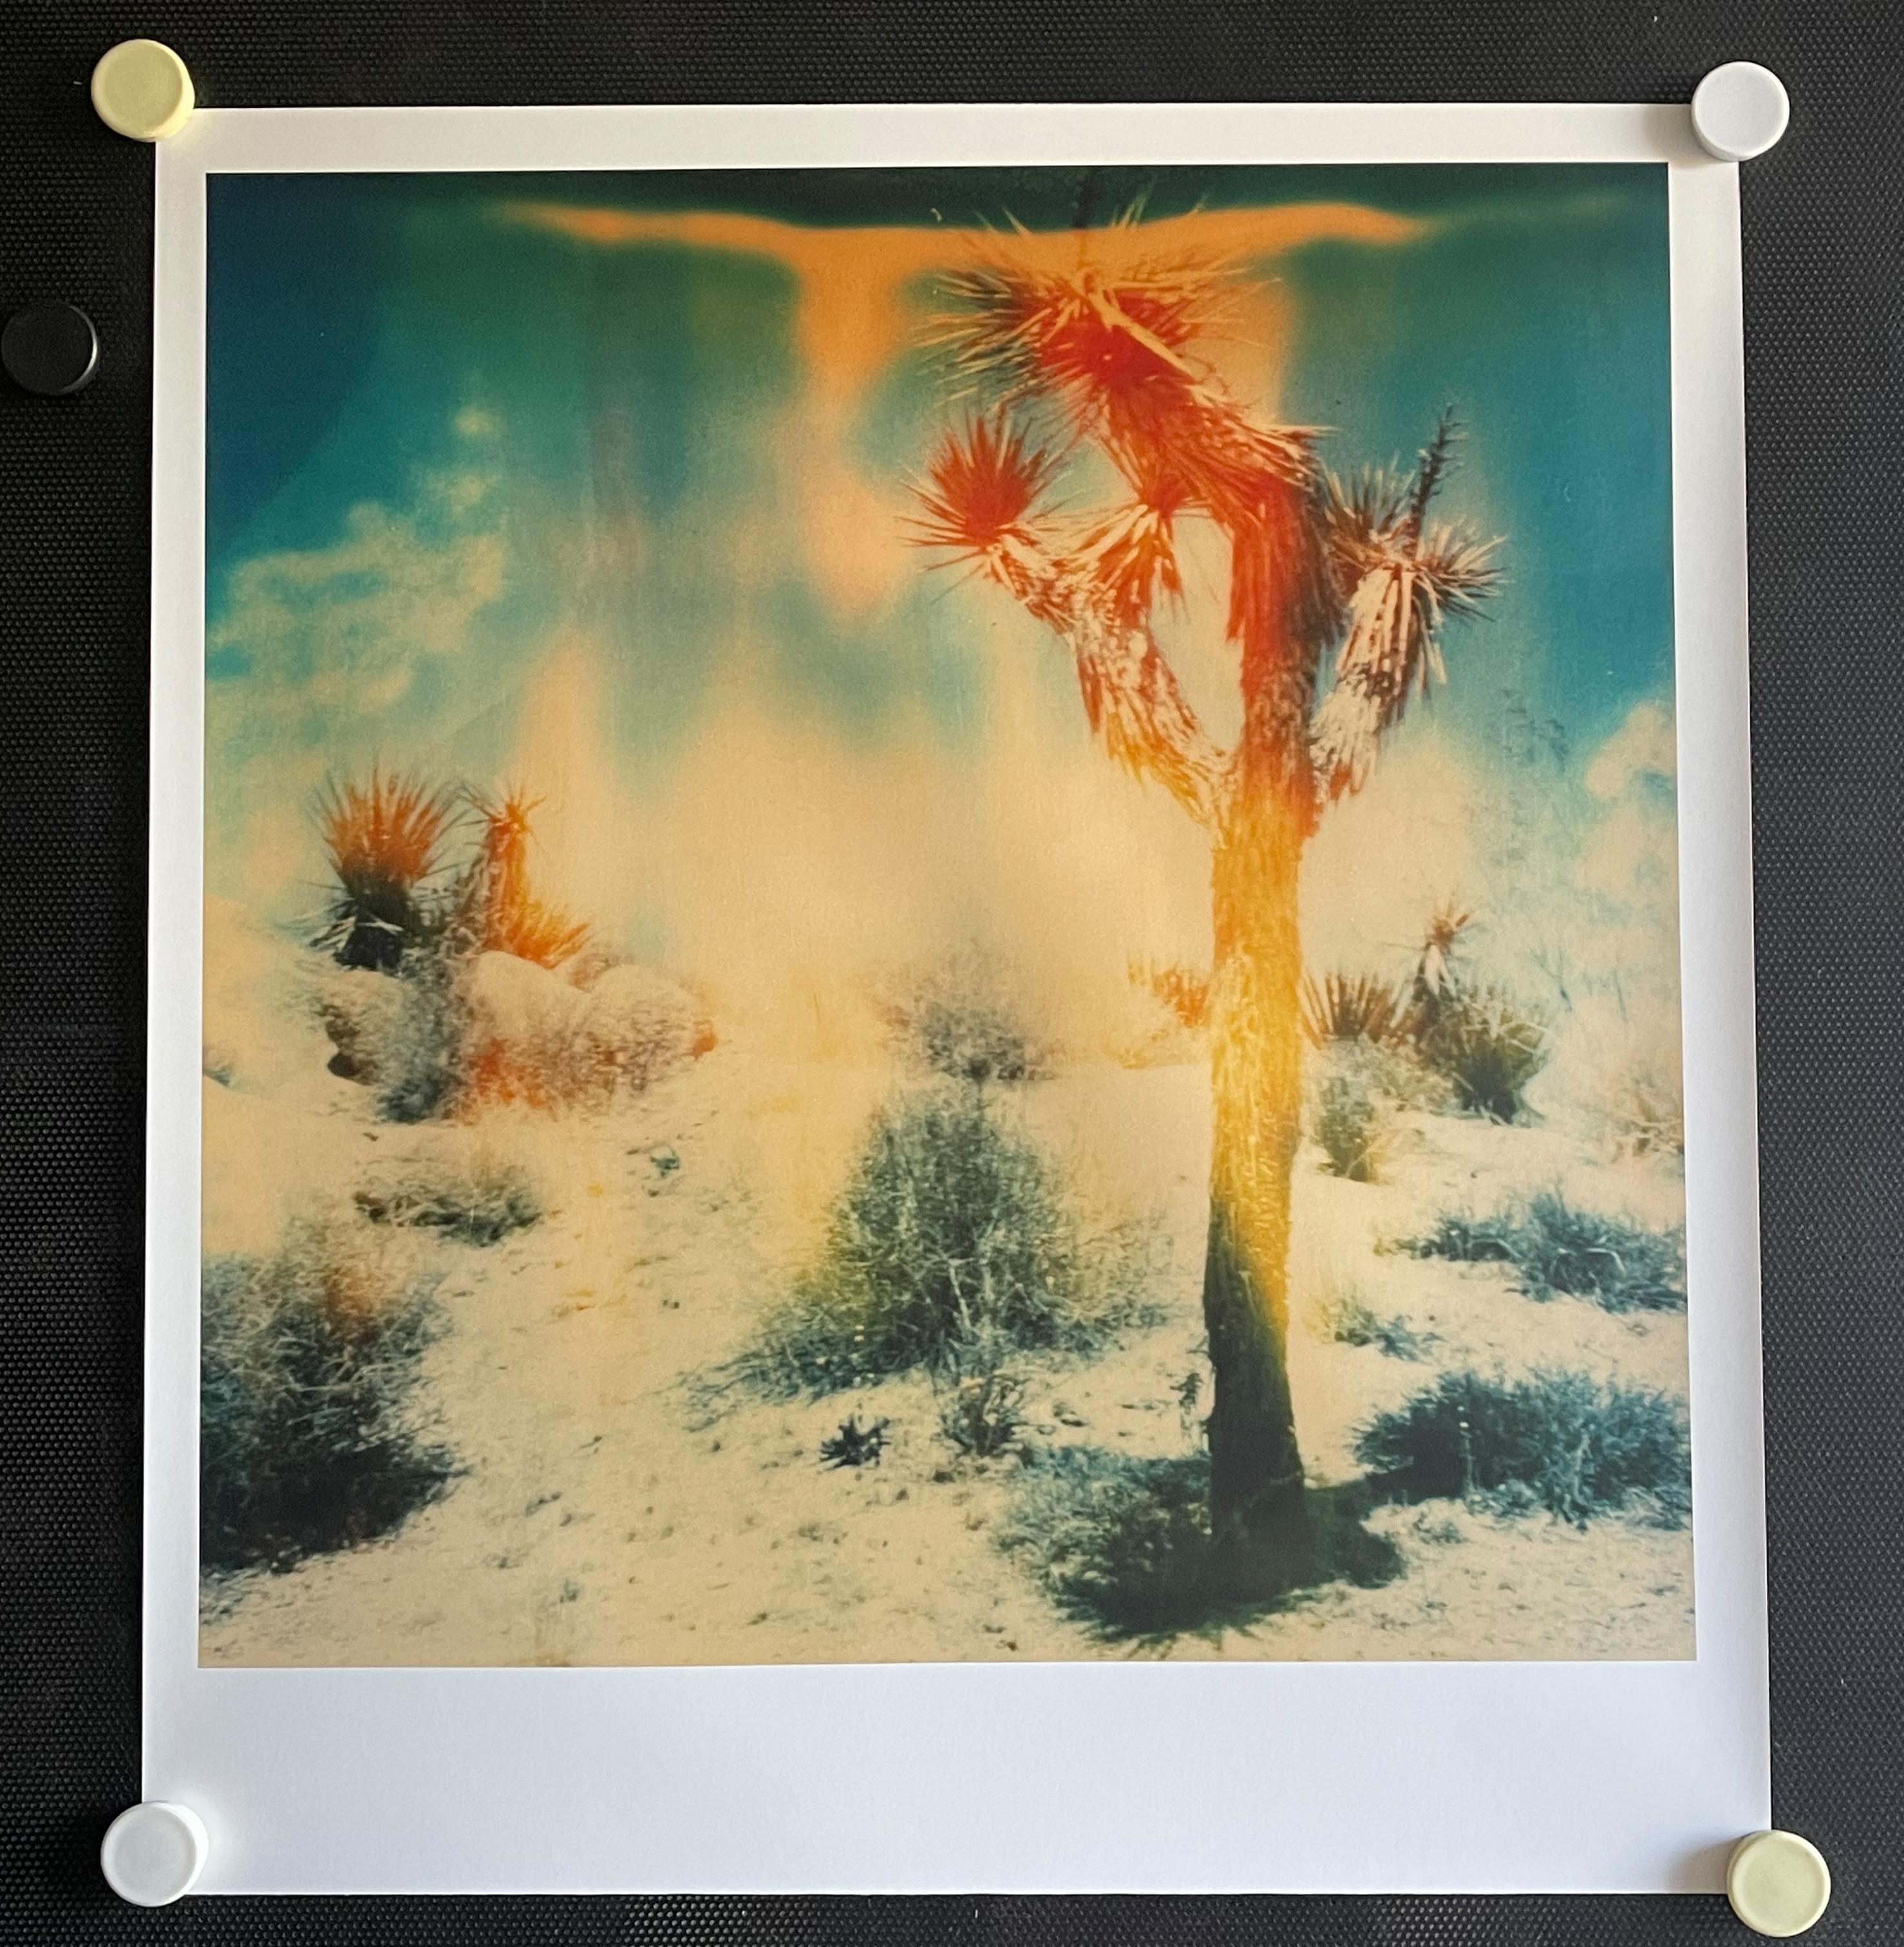 Buried - Contemporary, Landschaft, Figurativ, abgelaufen, Polaroid, analog